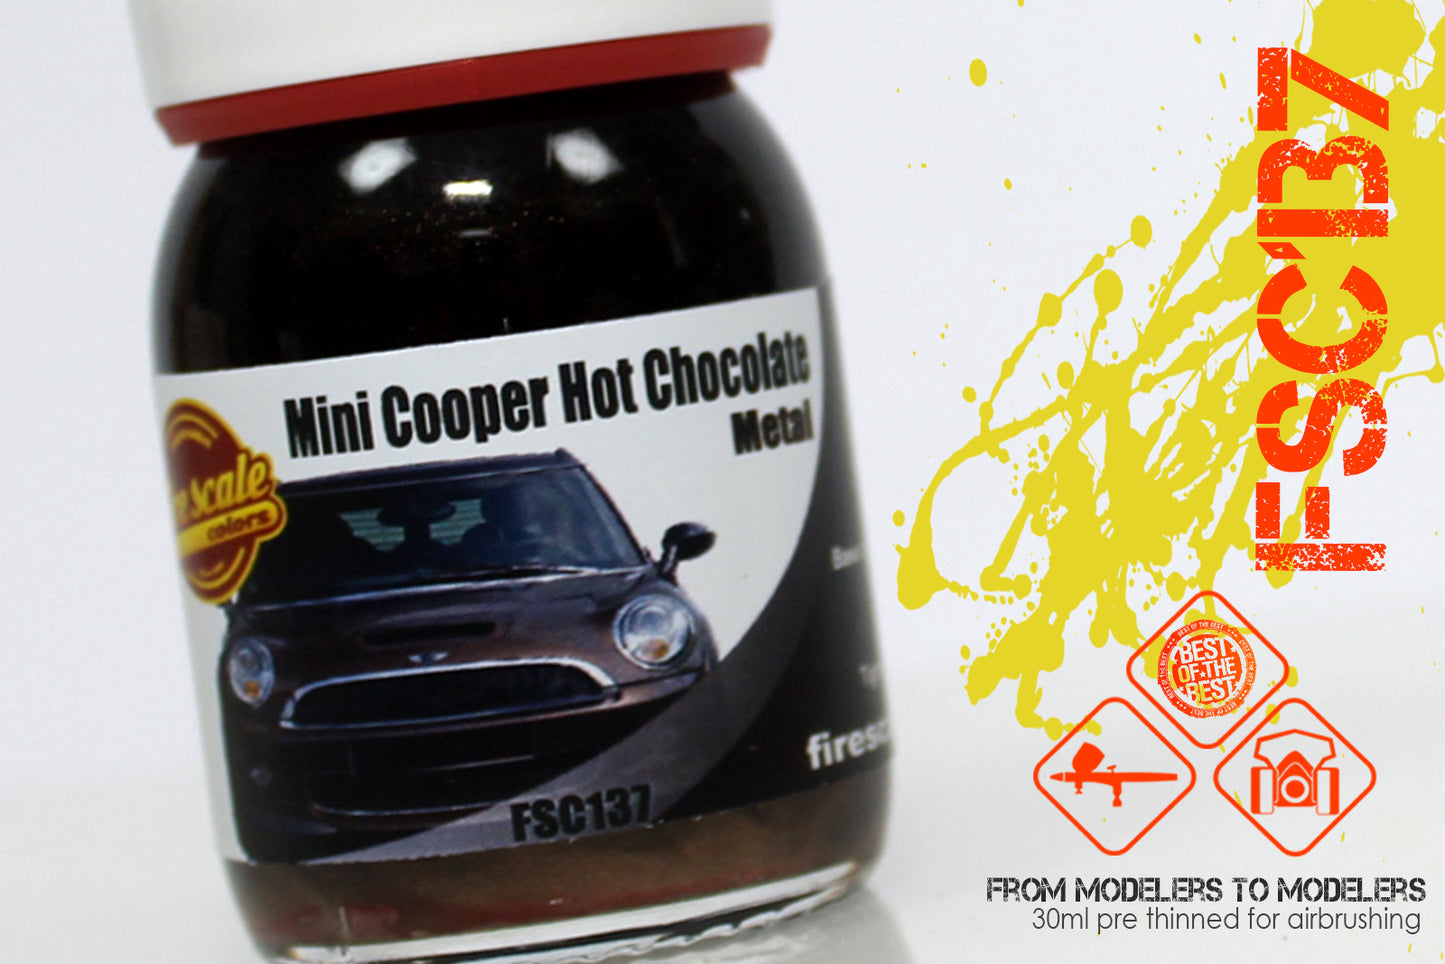 Mini Cooper Hot Chocolate